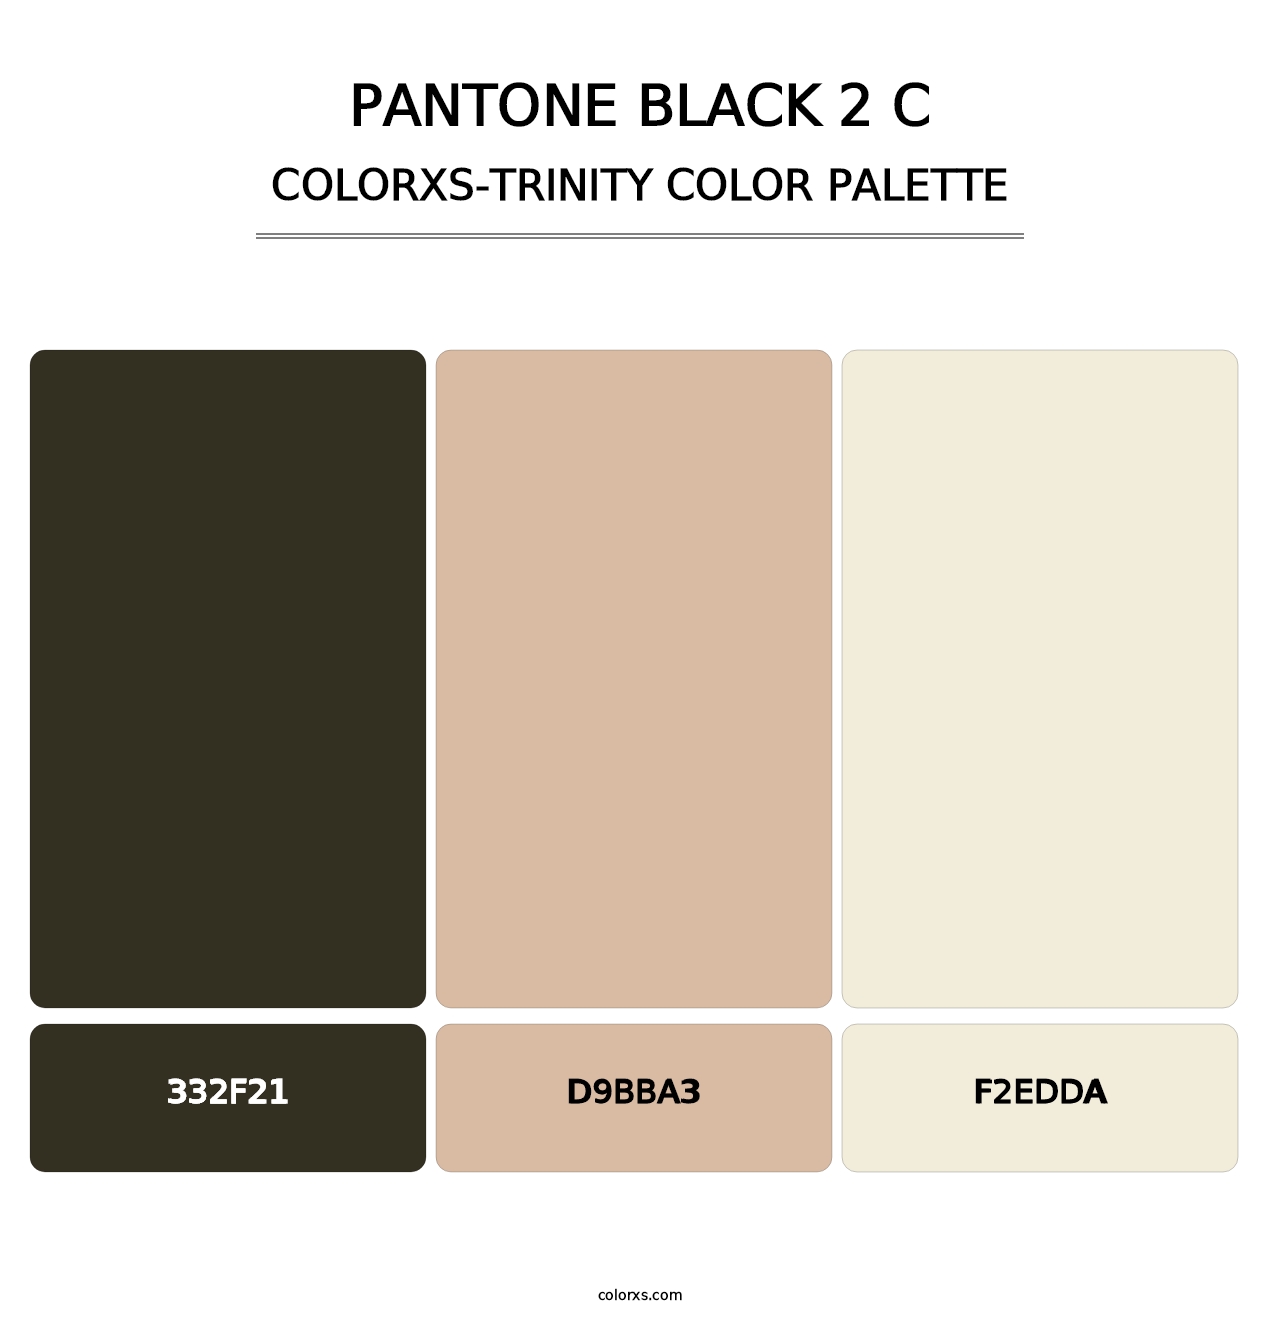 PANTONE Black 2 C - Colorxs Trinity Palette